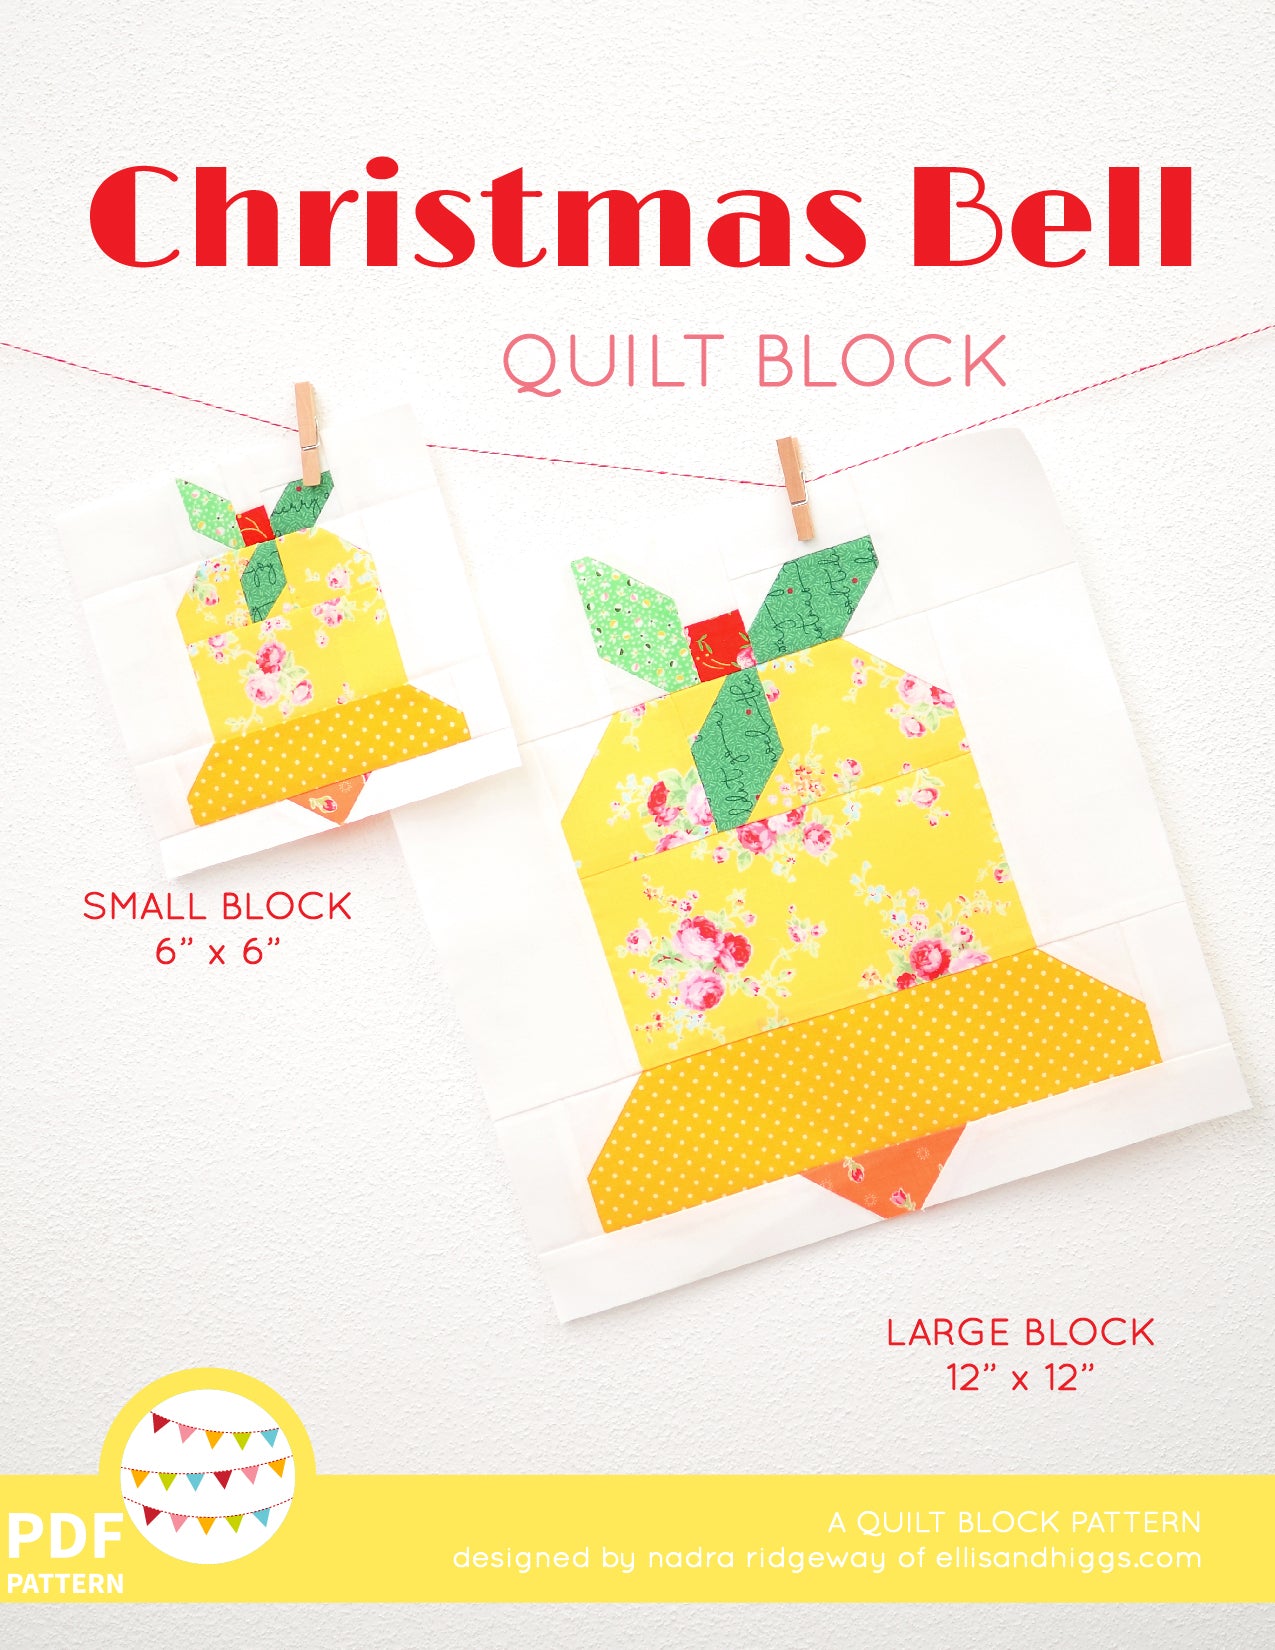 Pattern, Christmas Bell Quilt Block by Ellis & Higgs (digital download)